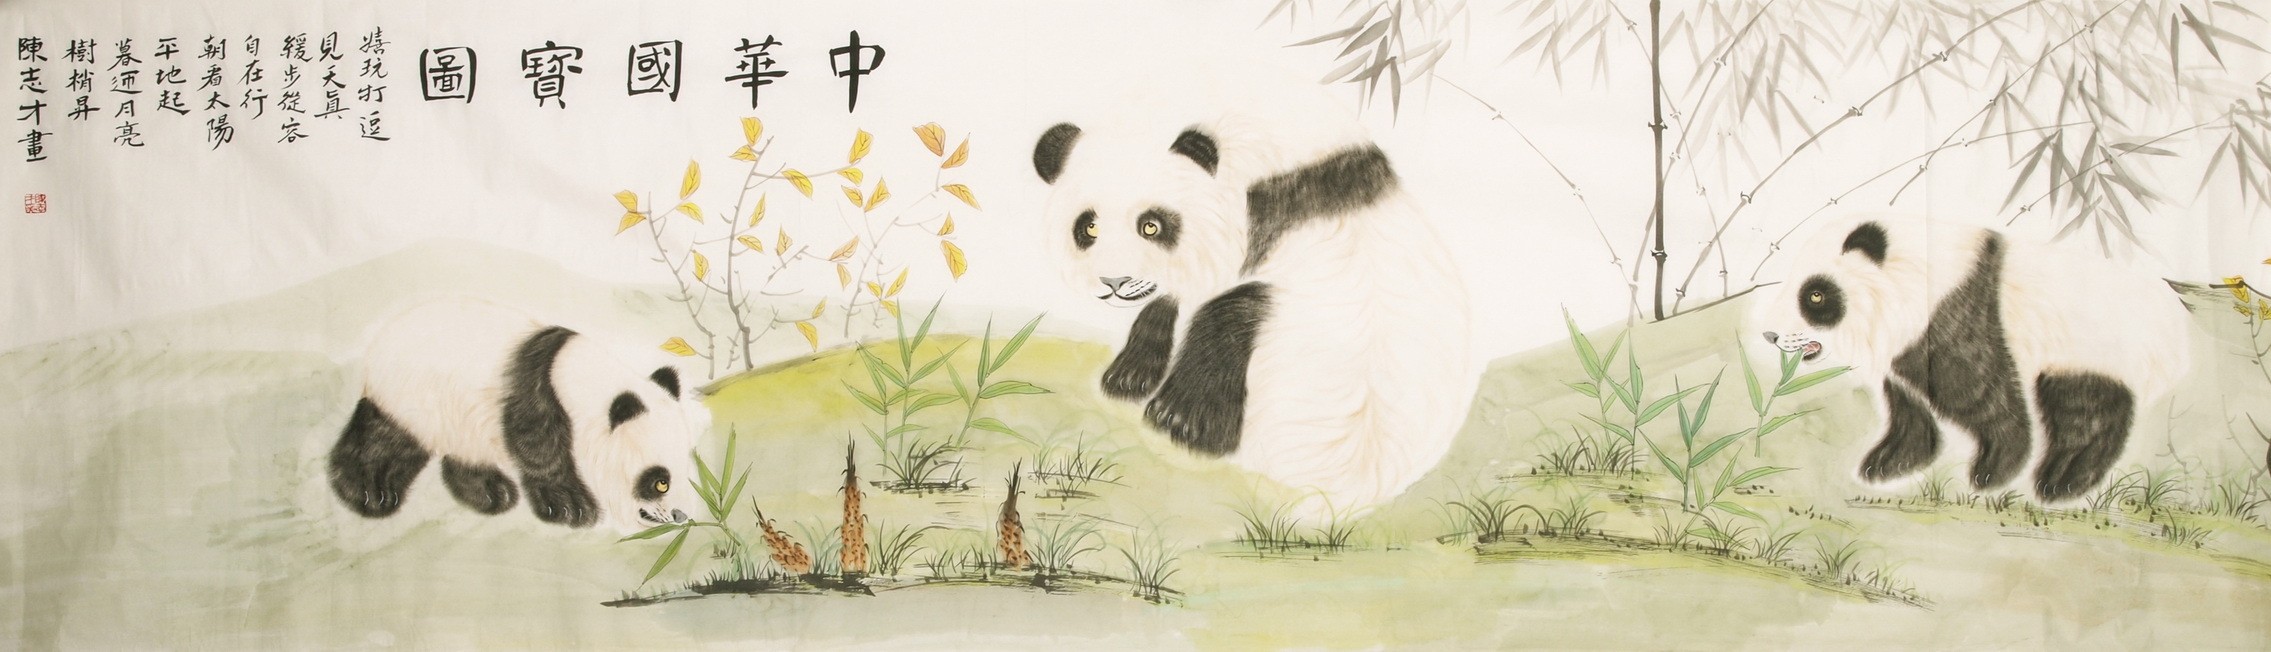 Panda - CNAG001909